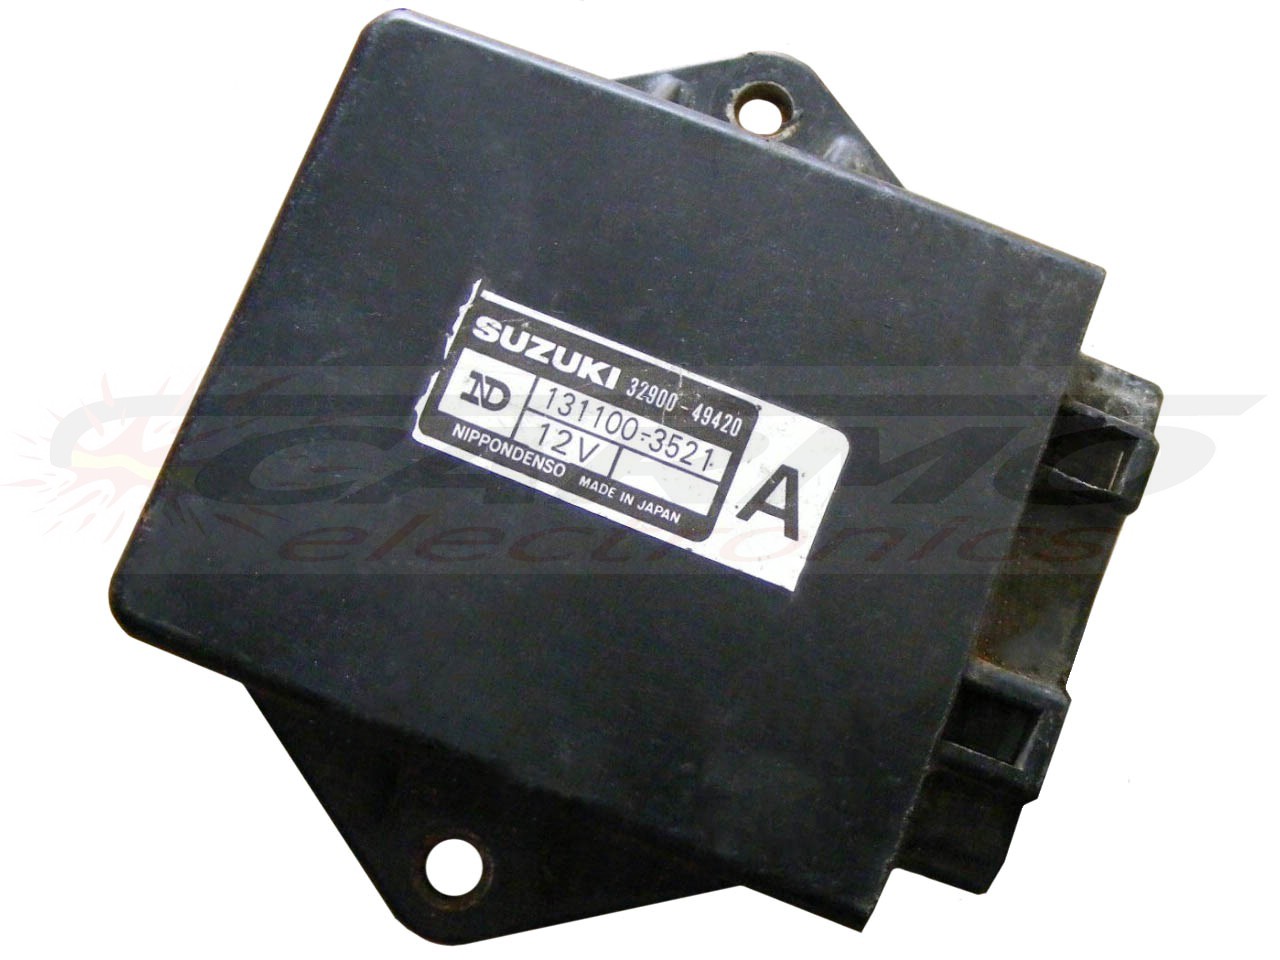 GSXR1100 igniter ignition module CDI TCI Box (131100-3521)